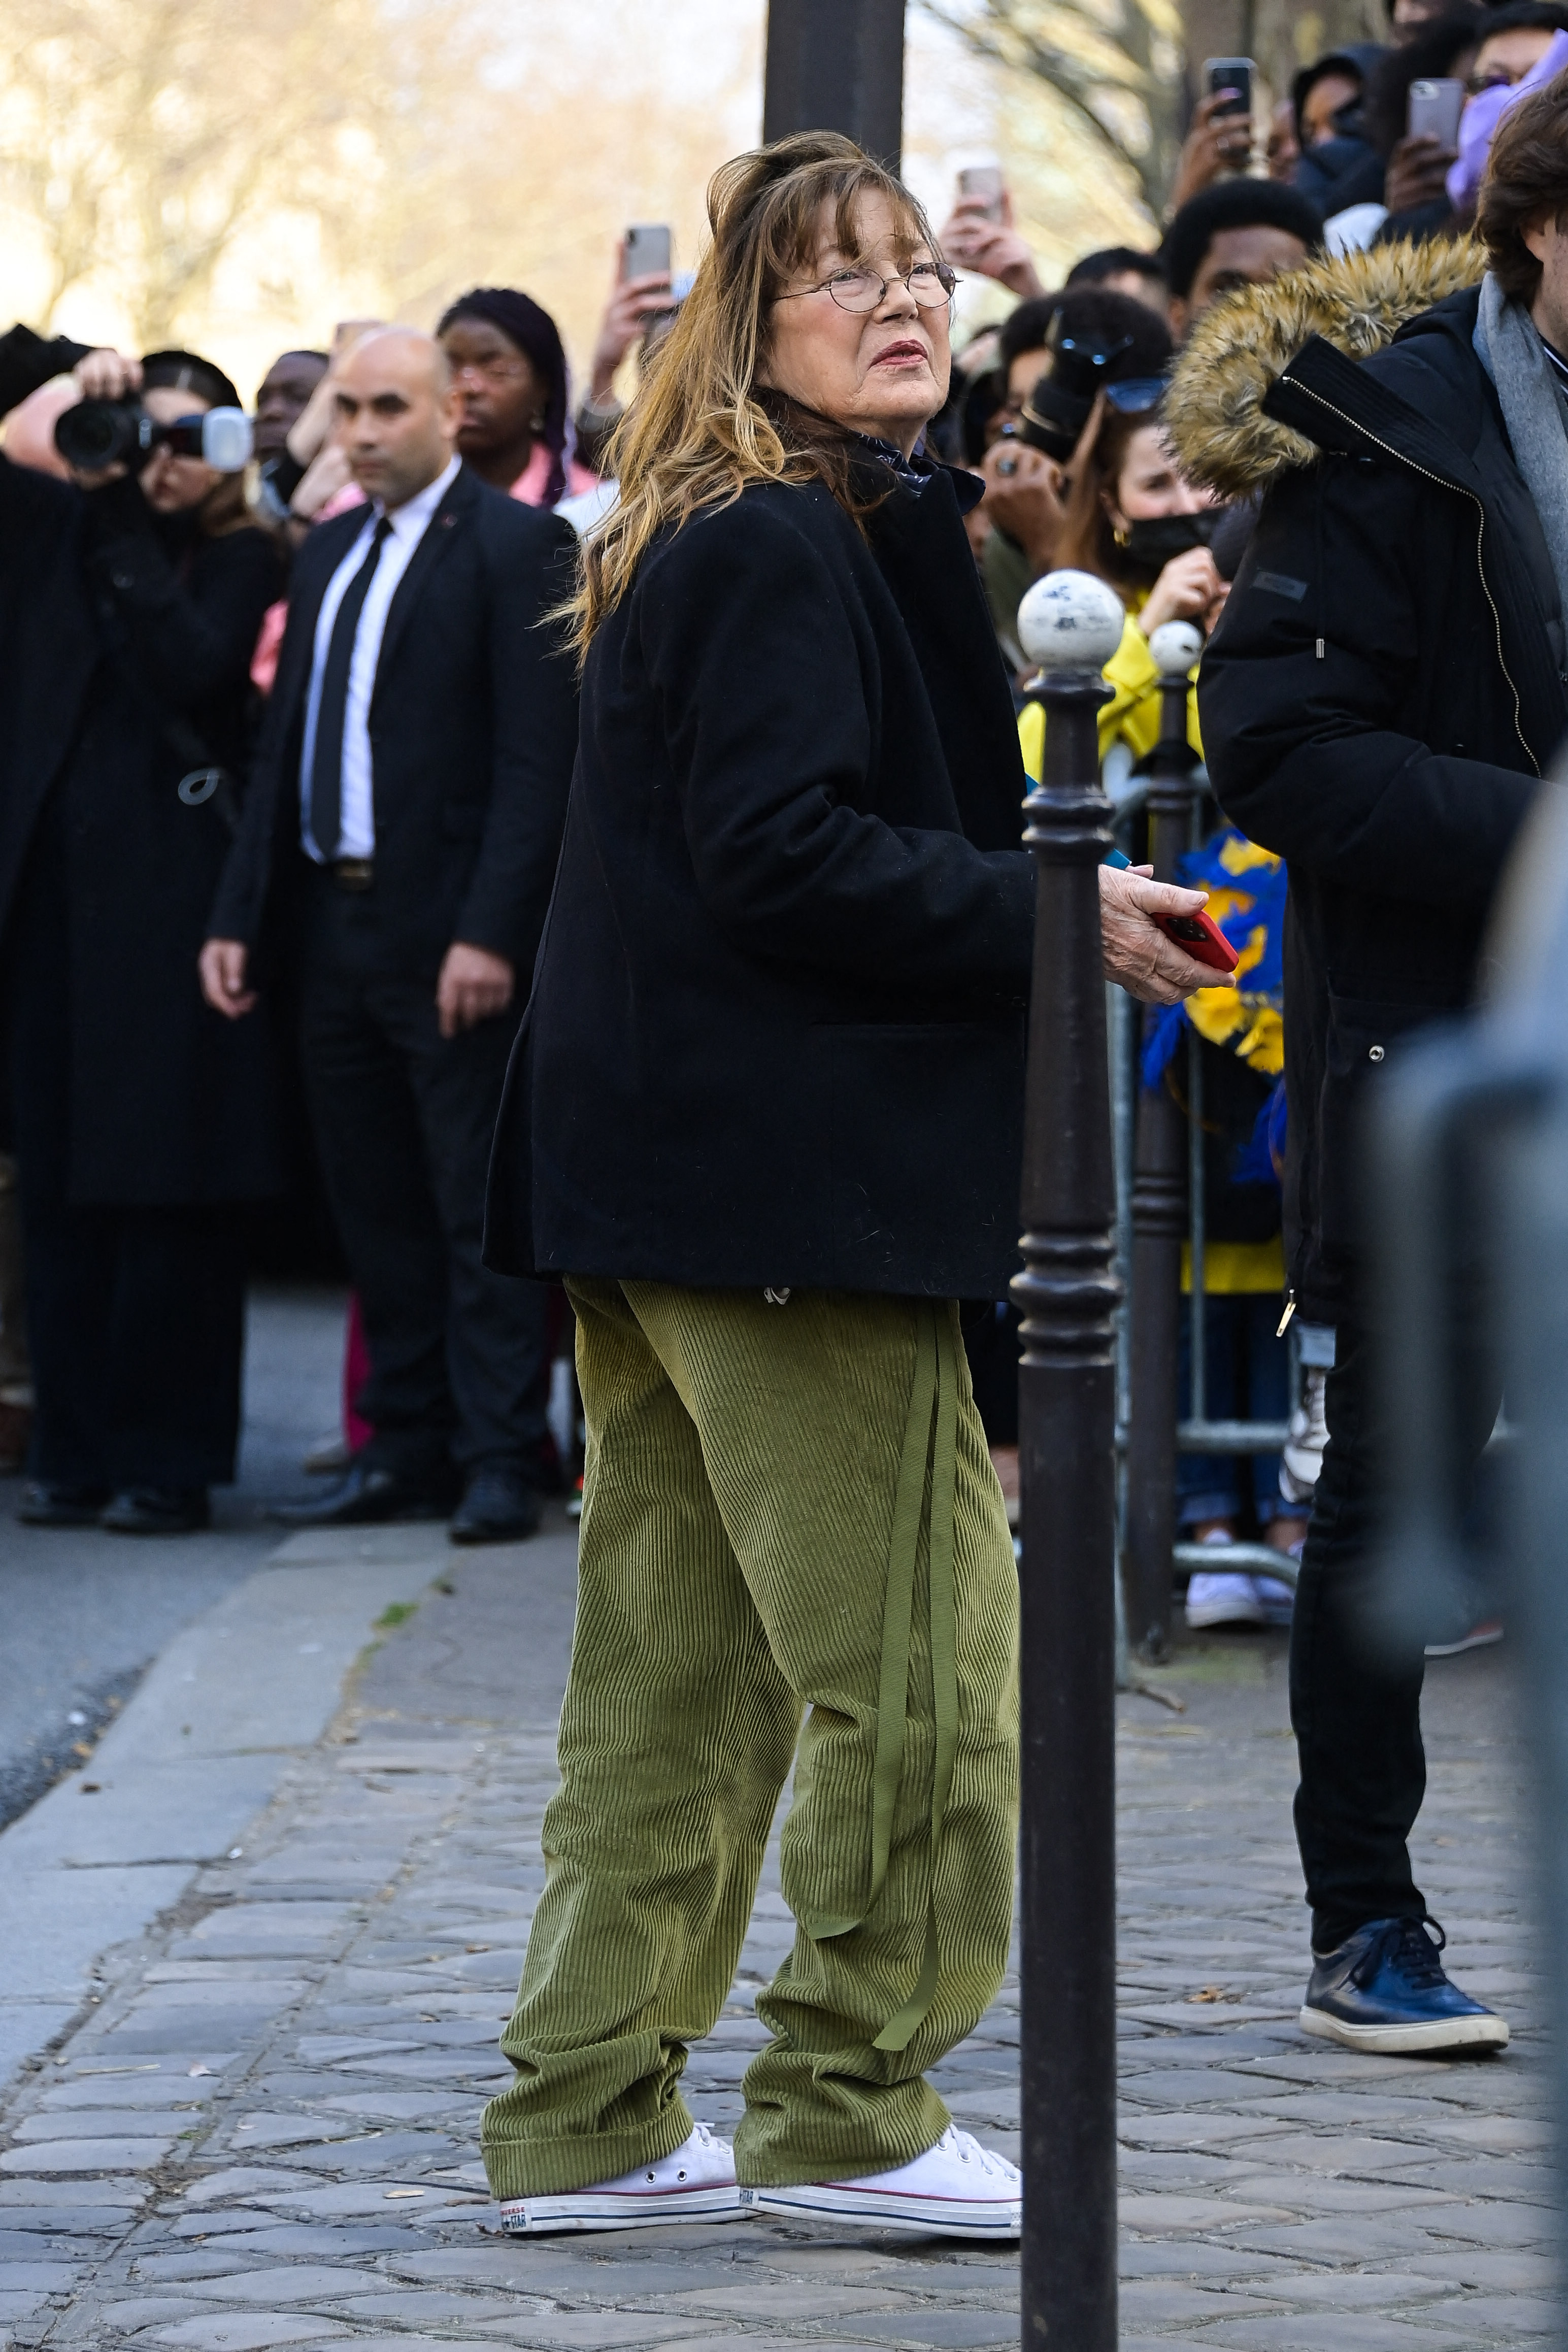 Jane Birkin recently in a Hermes desfilee holding her Birkin bag